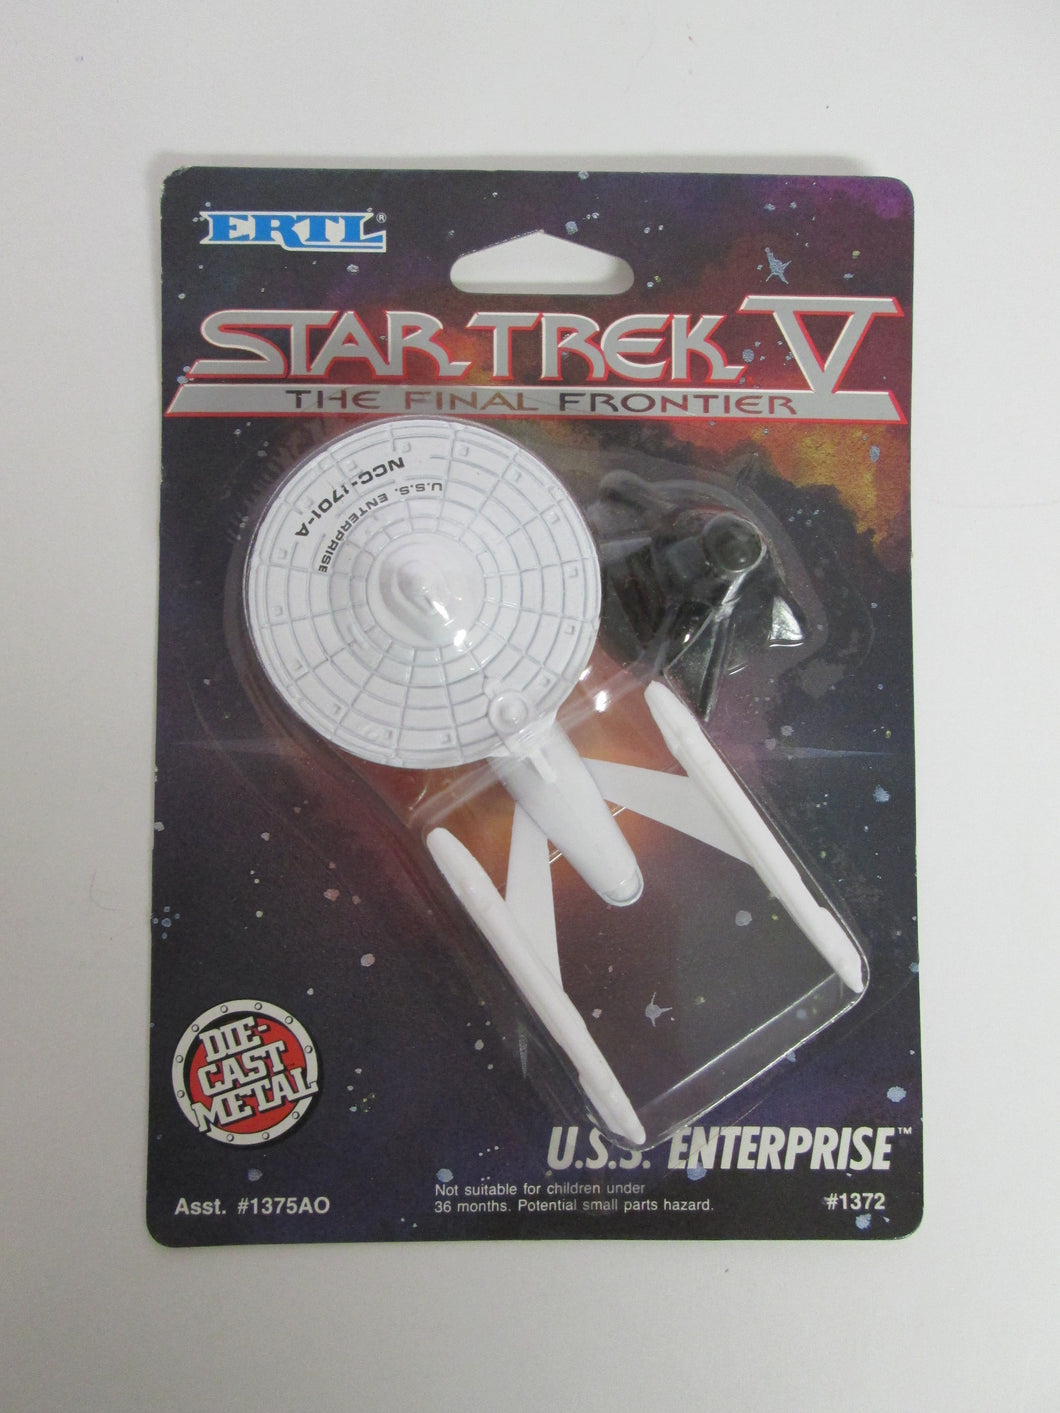 Star Trek V The Final Frontier U.S.S. Enterprise Die Cast (Ertl)(1989)